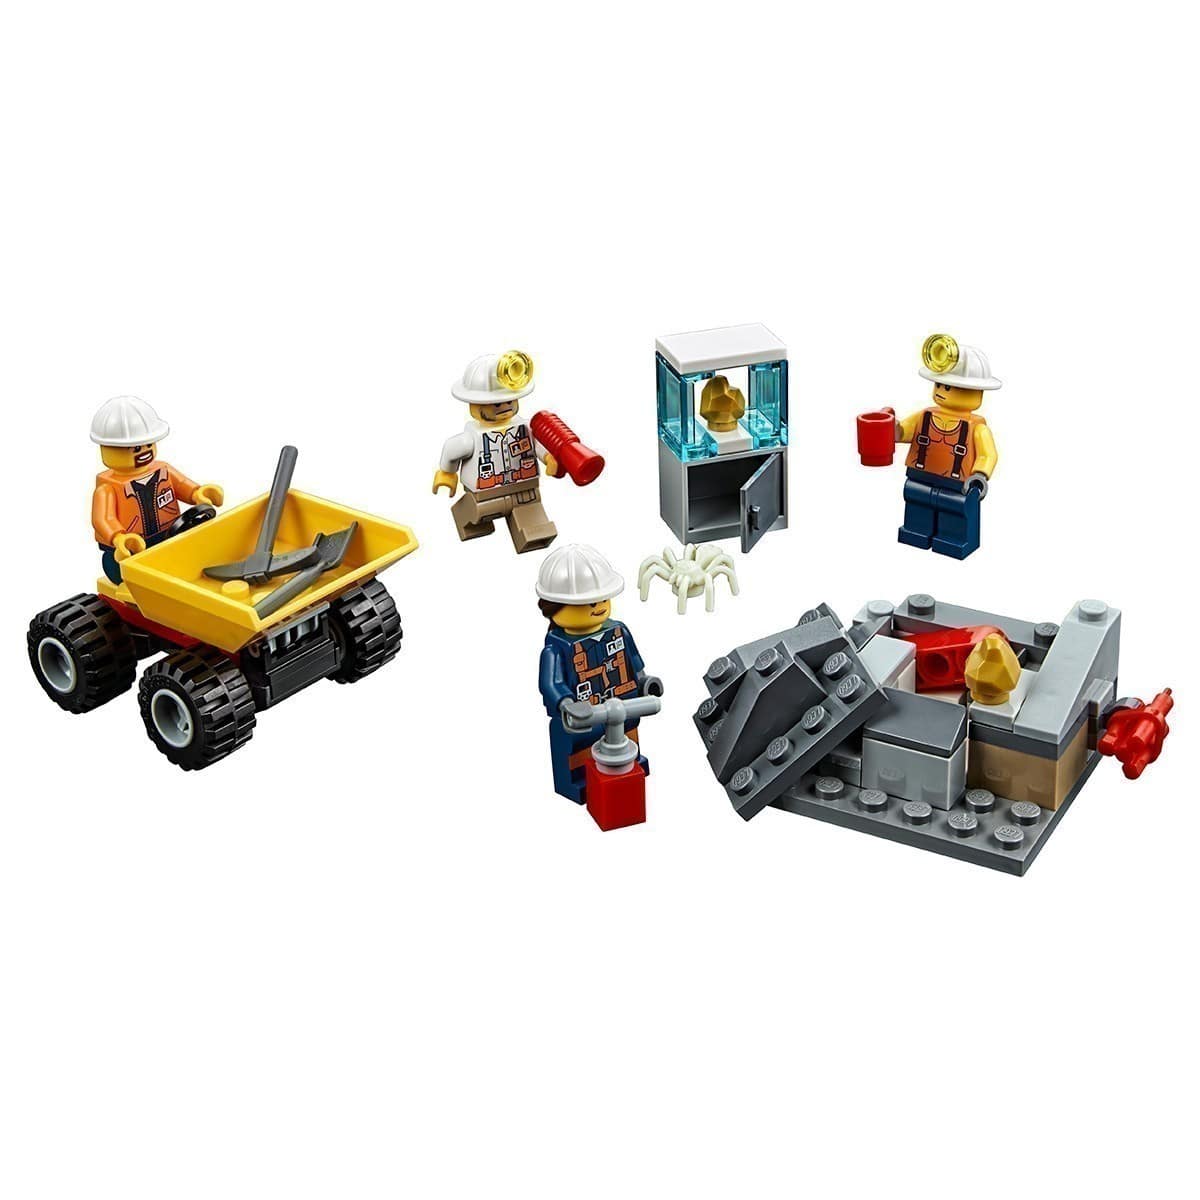 LEGO® City - 60184 Mining Team